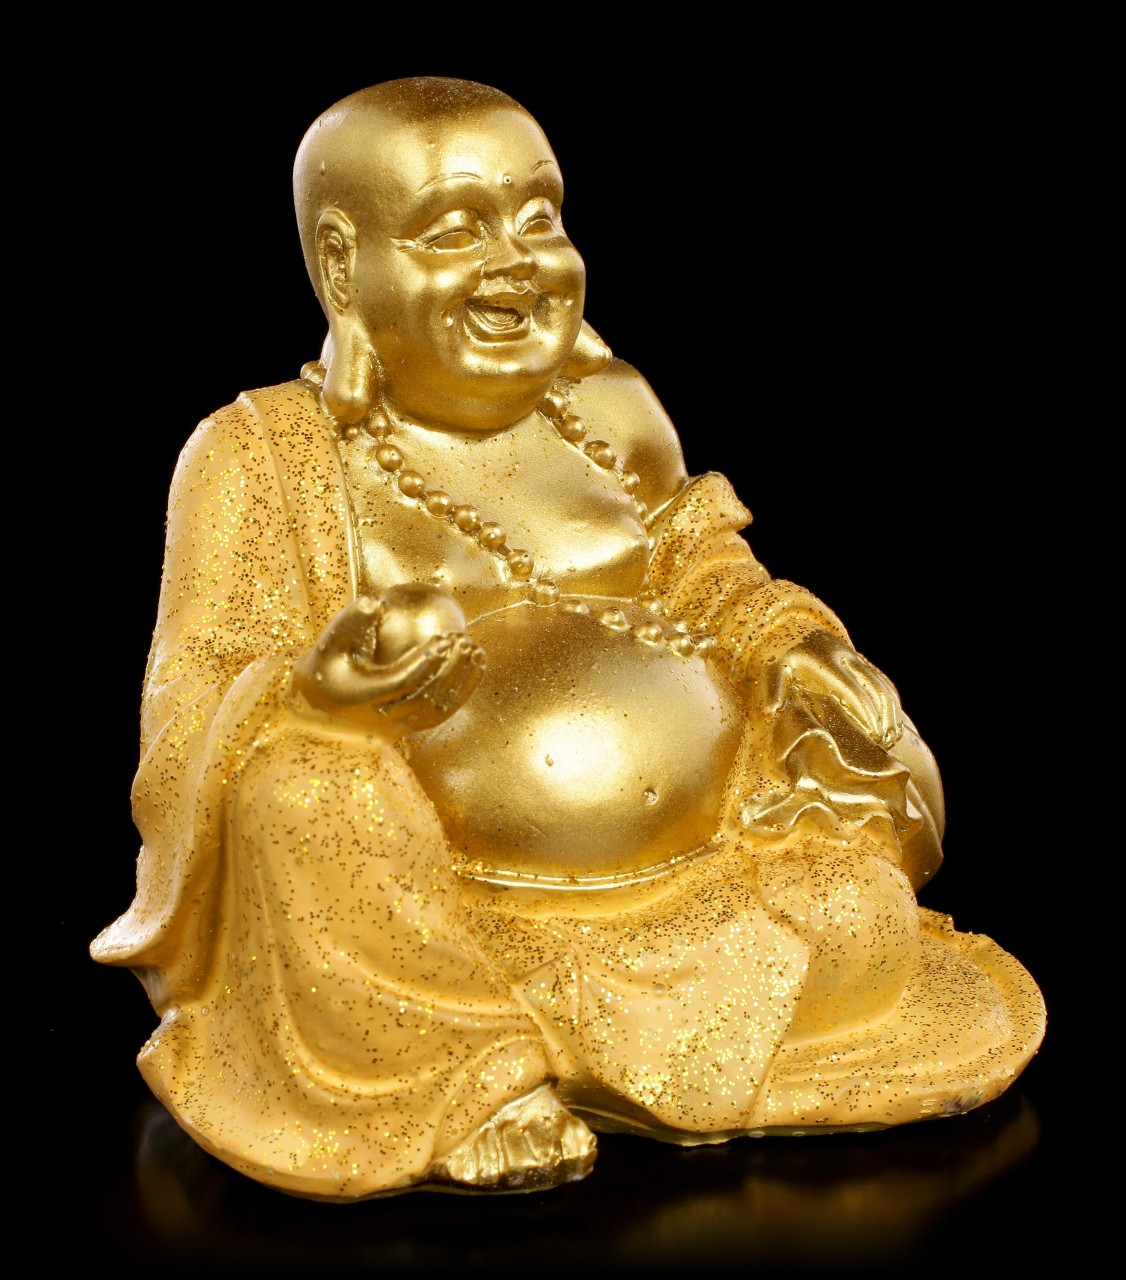 Small Buddha Money Bank - Prosperity